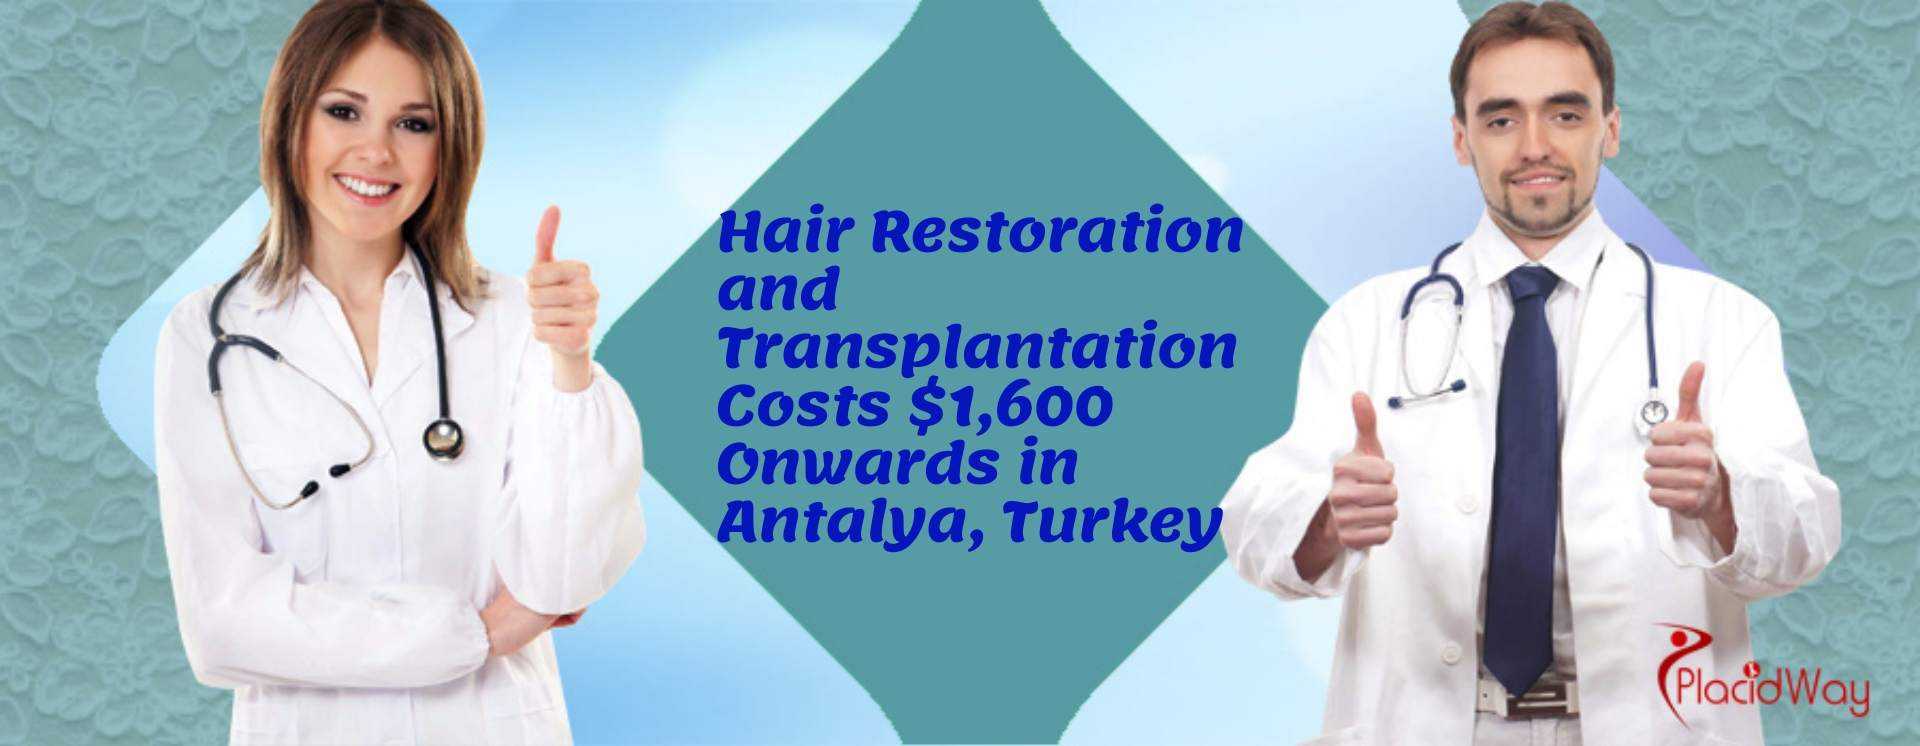 Hair Restoration and Transplantation in Antalya, Turkey